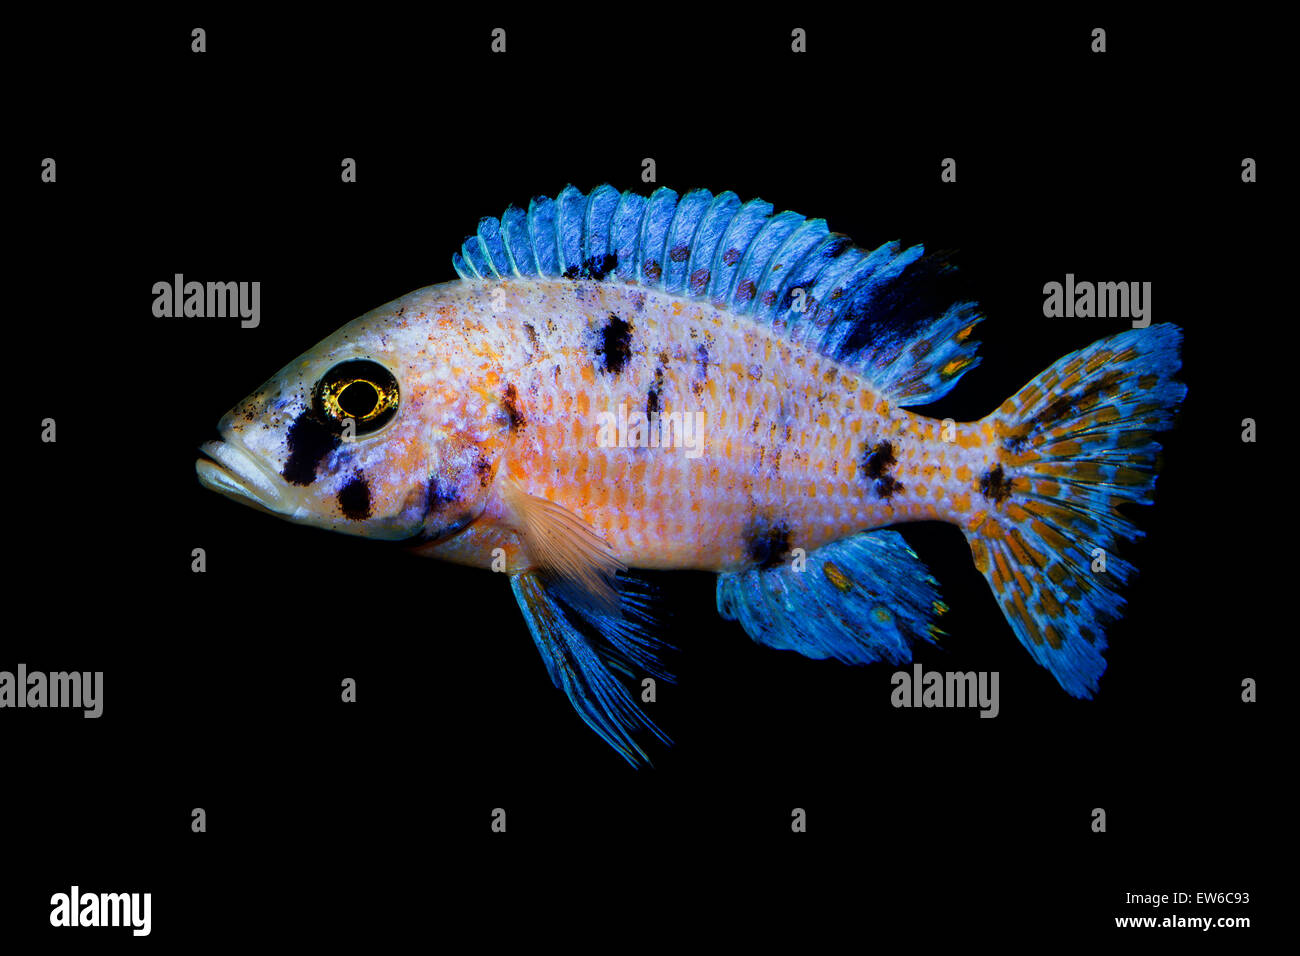 Aulonocara fish from Malawi lake on the black backgrounfd. Stock Photo